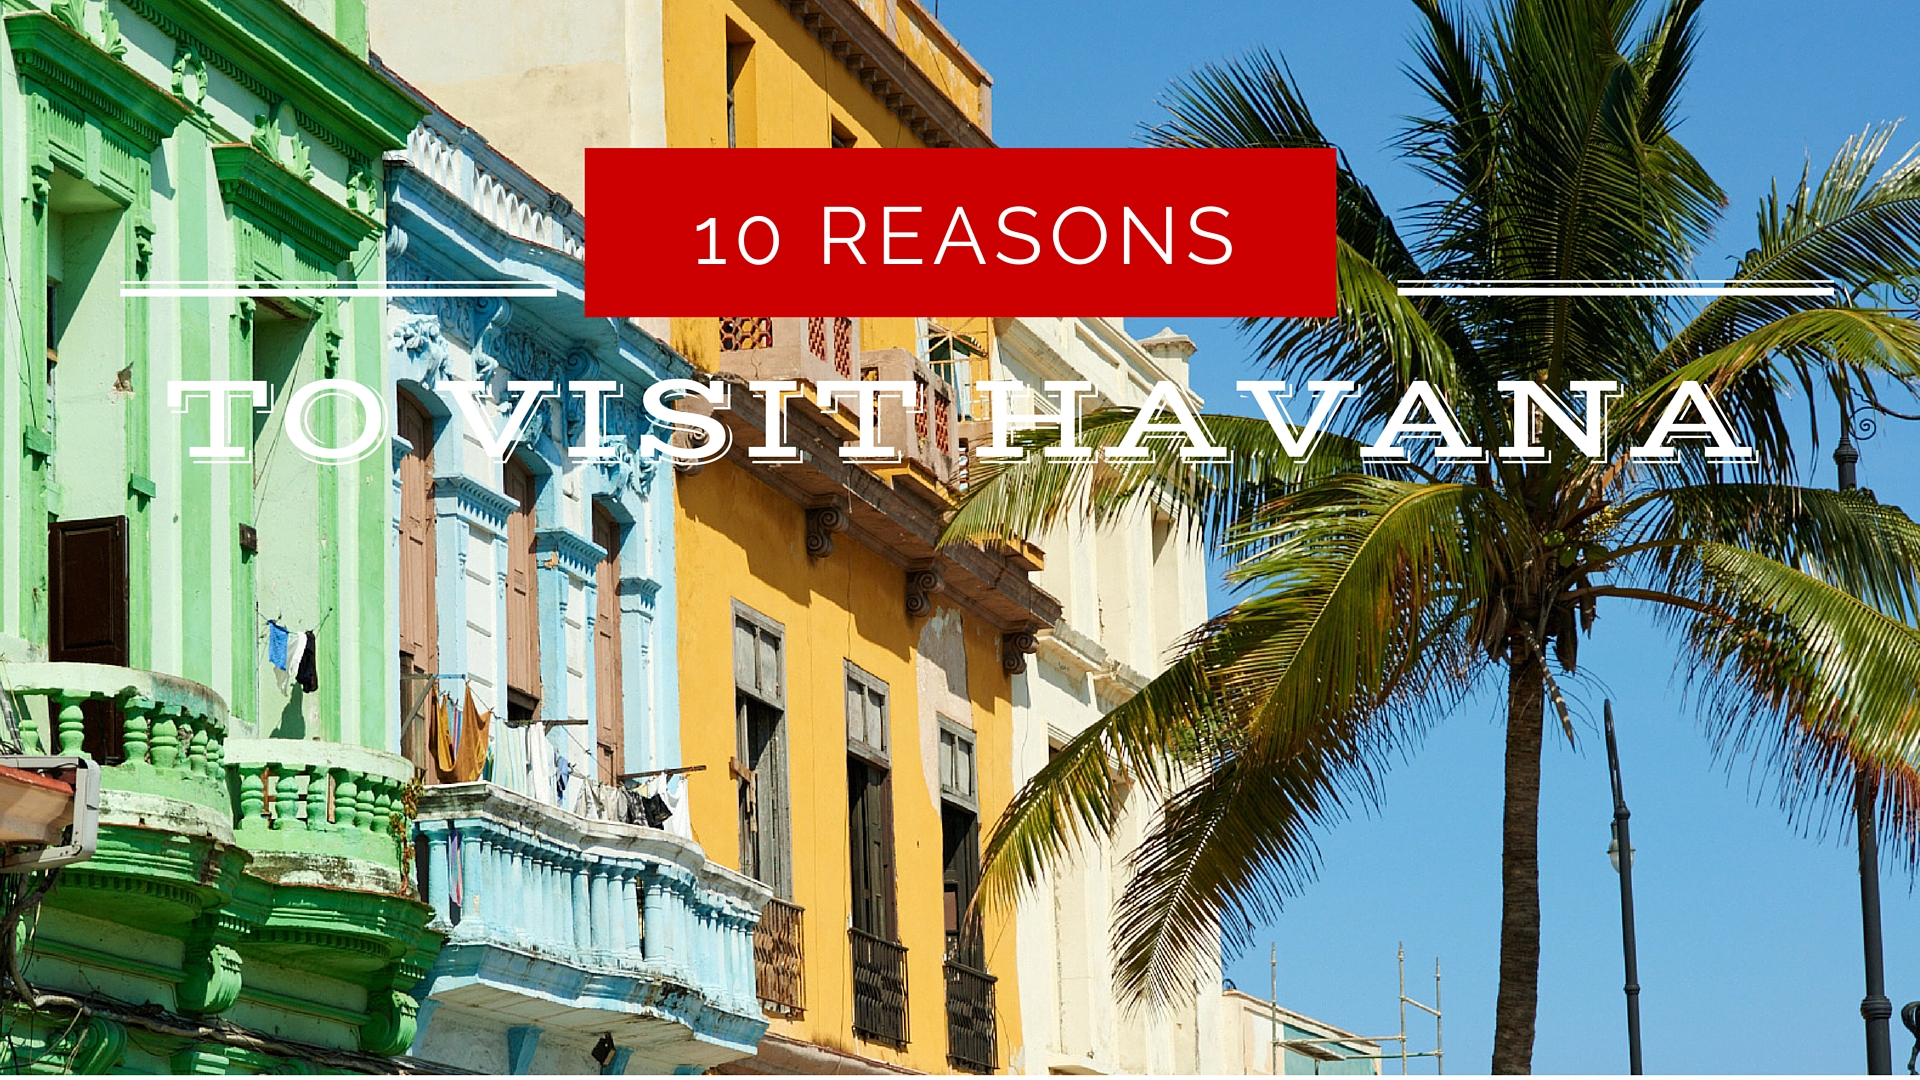 reasons to visit havana cuba